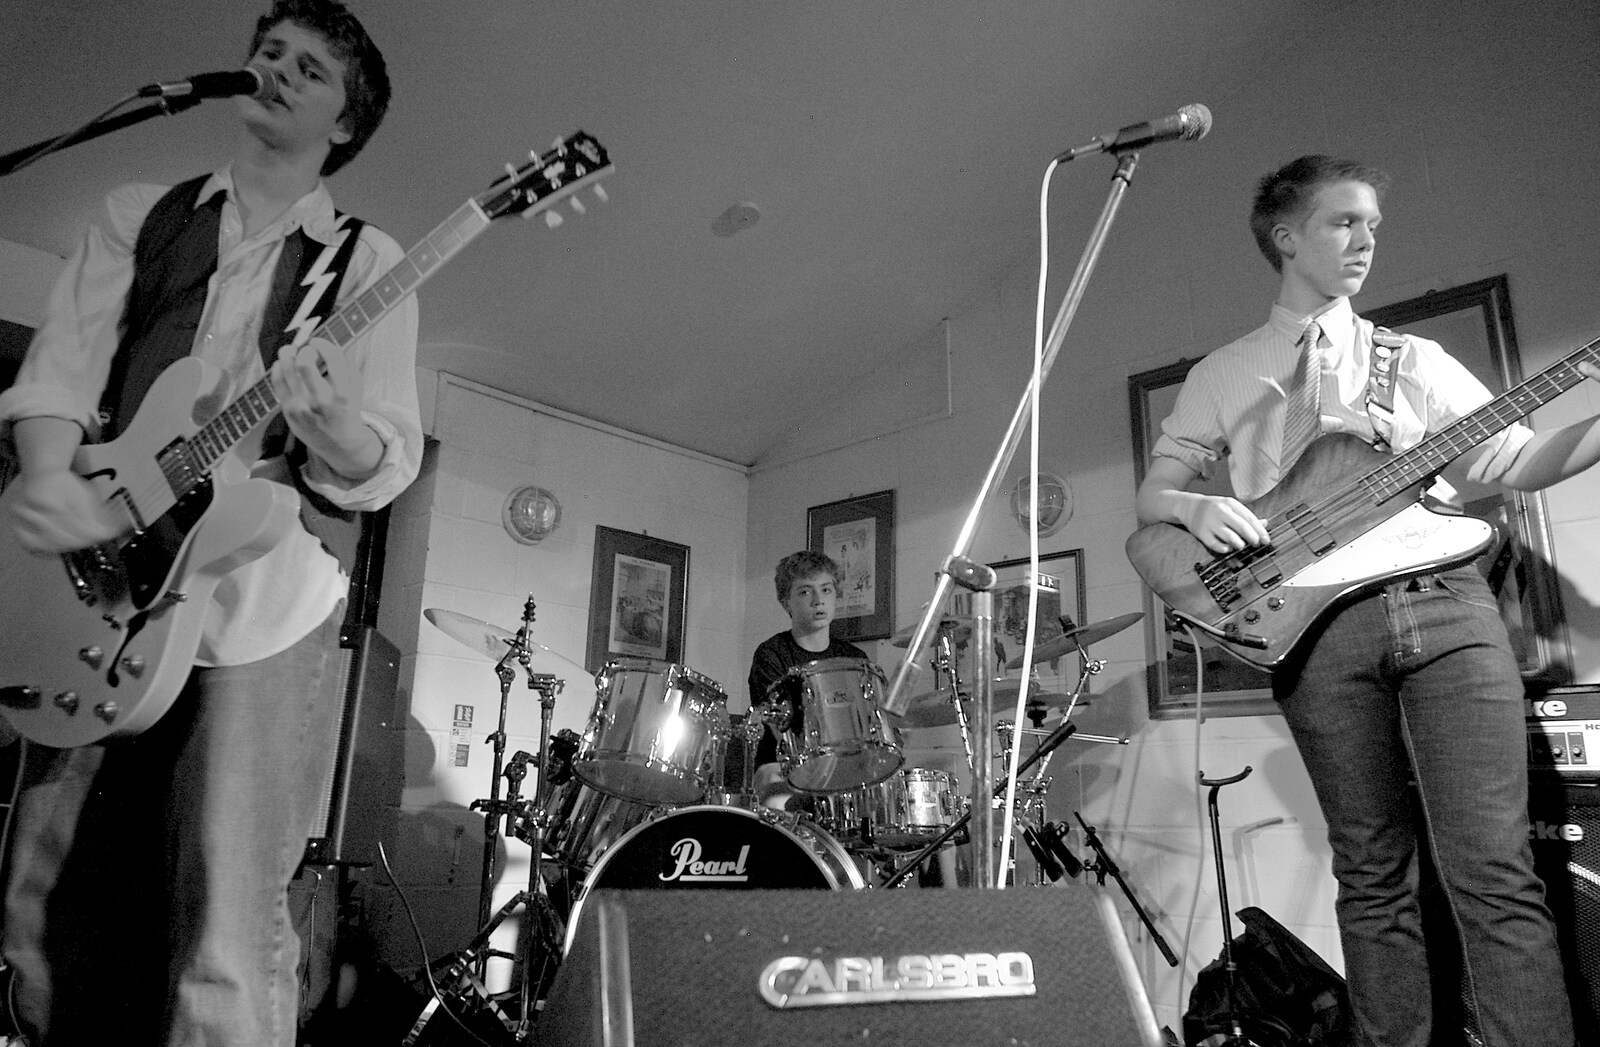 Vanilla Kick from The Destruction of Padley's, and Alex Hill at the Barrel, Diss and Banham - 12th November 2005